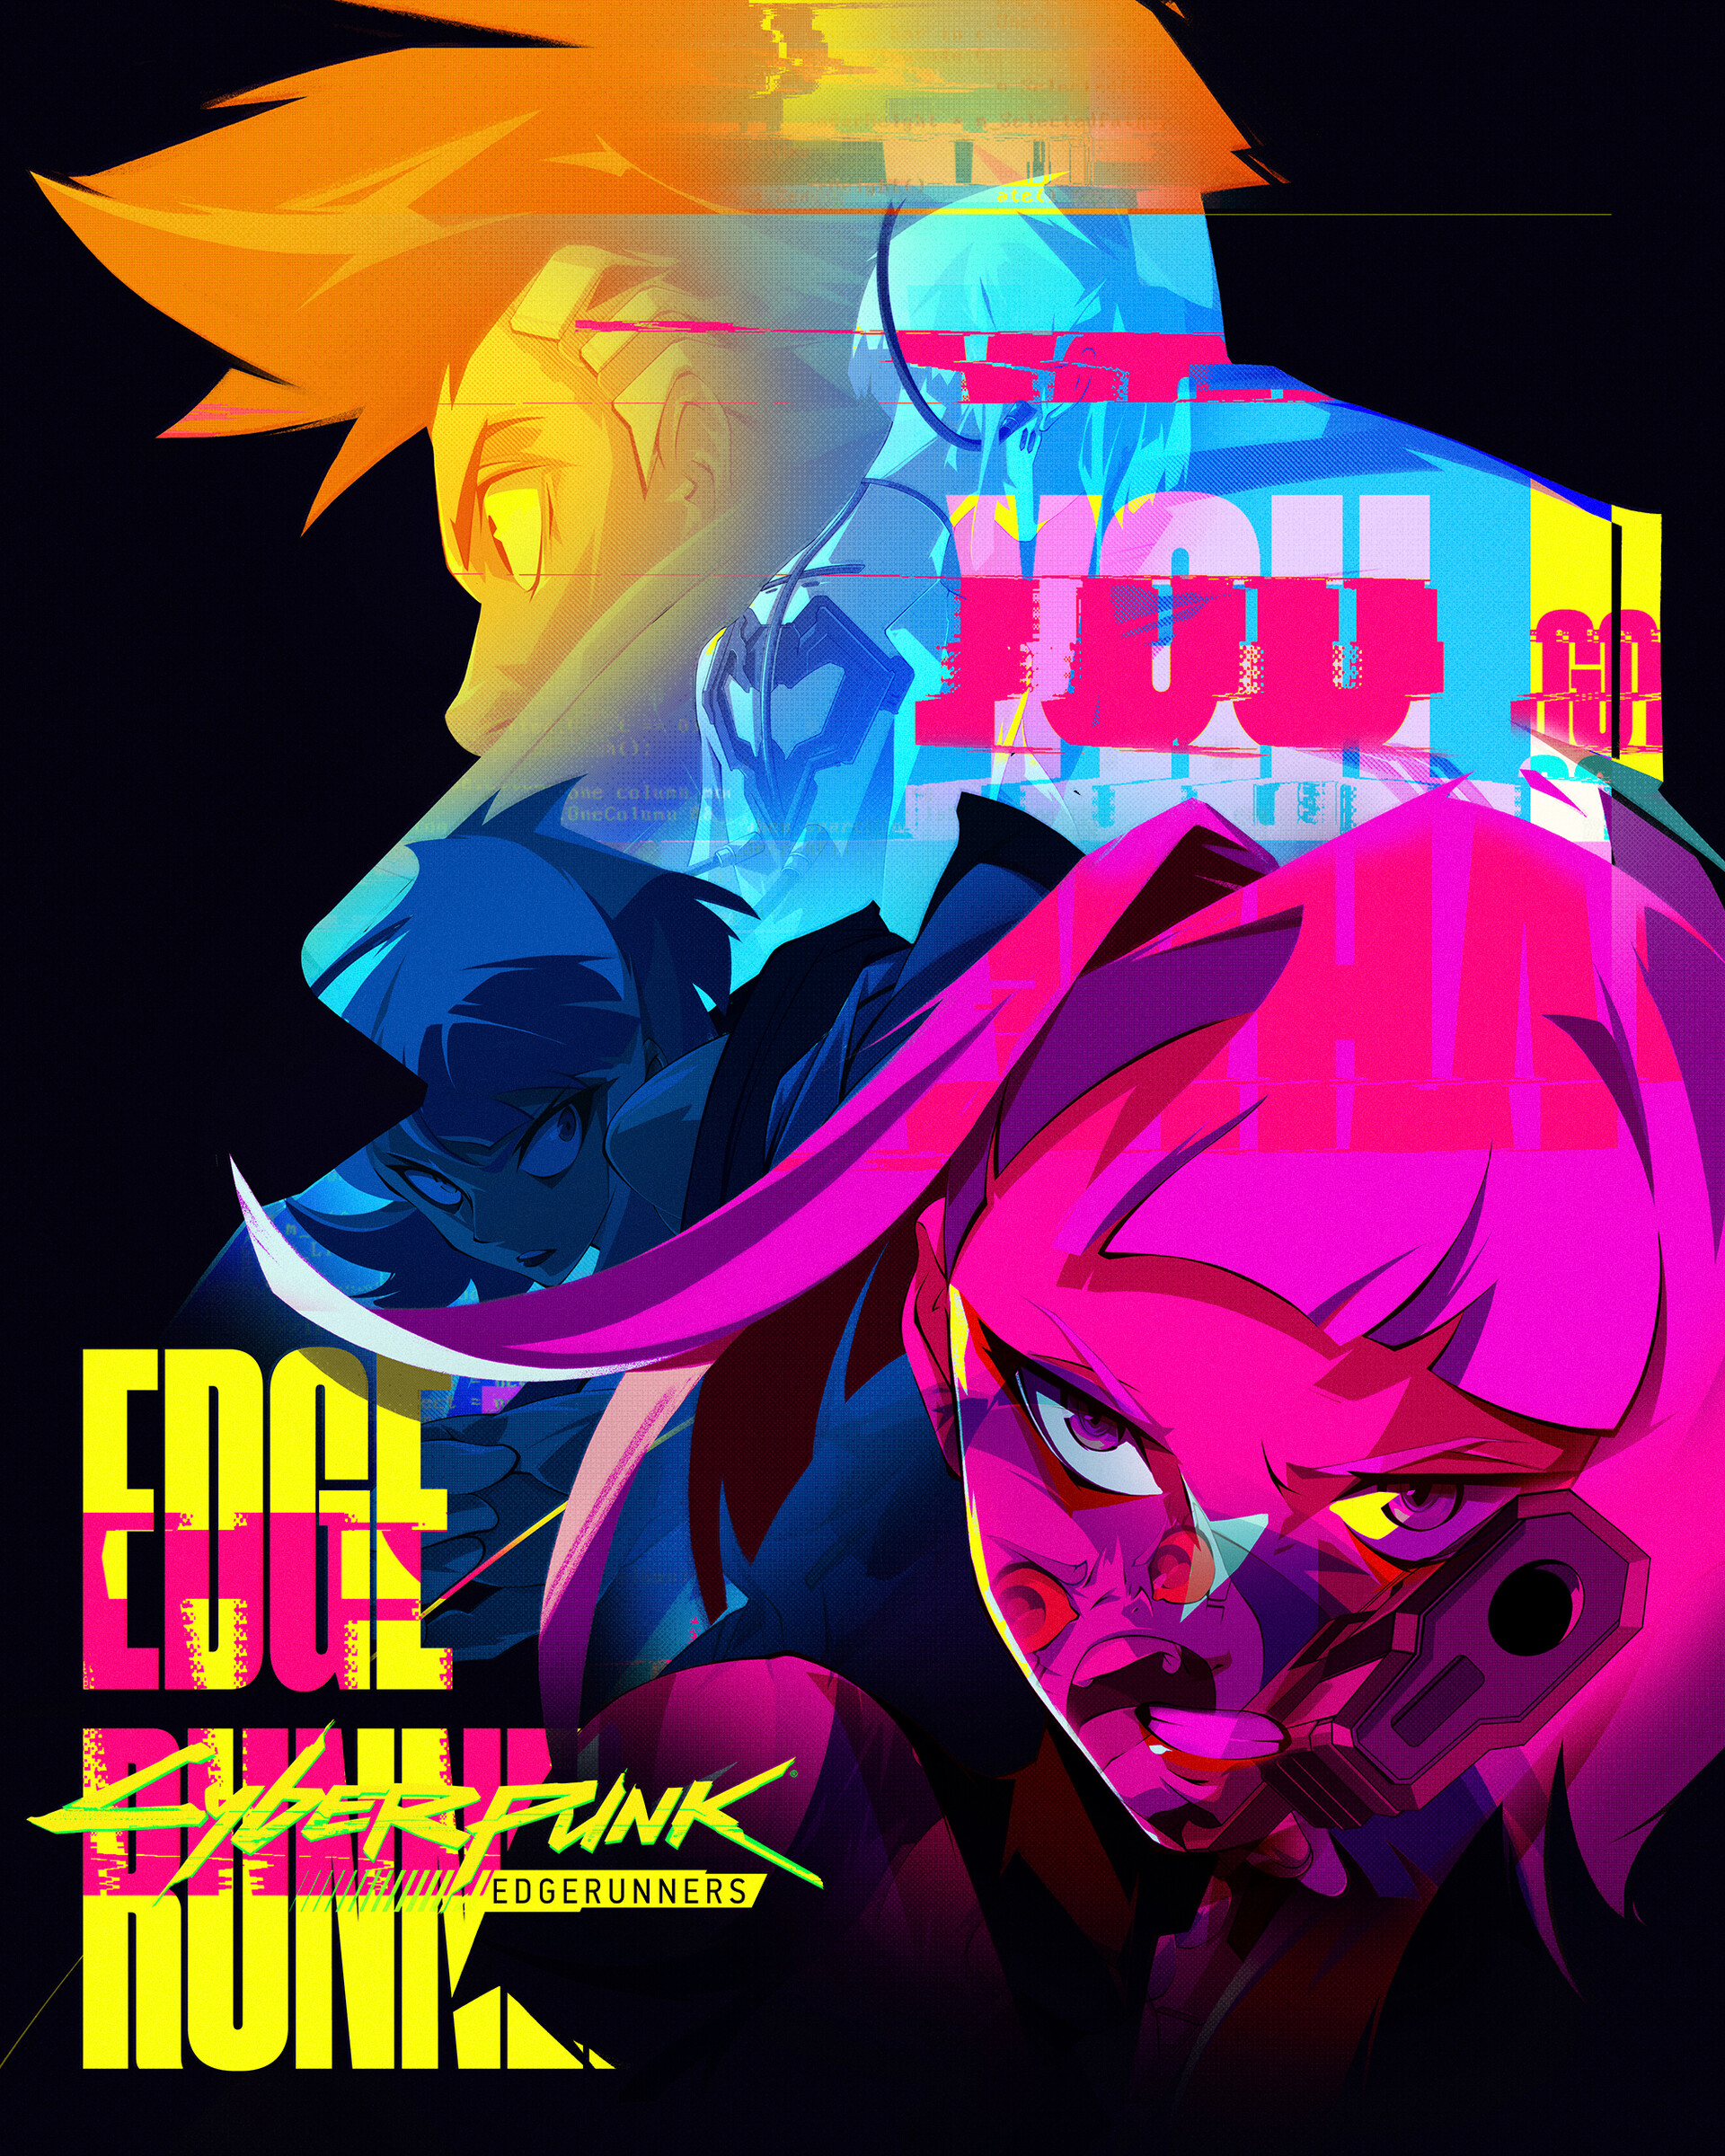 Anime Cyberpunk: Edgerunners HD Wallpaper by Artem Pavlov